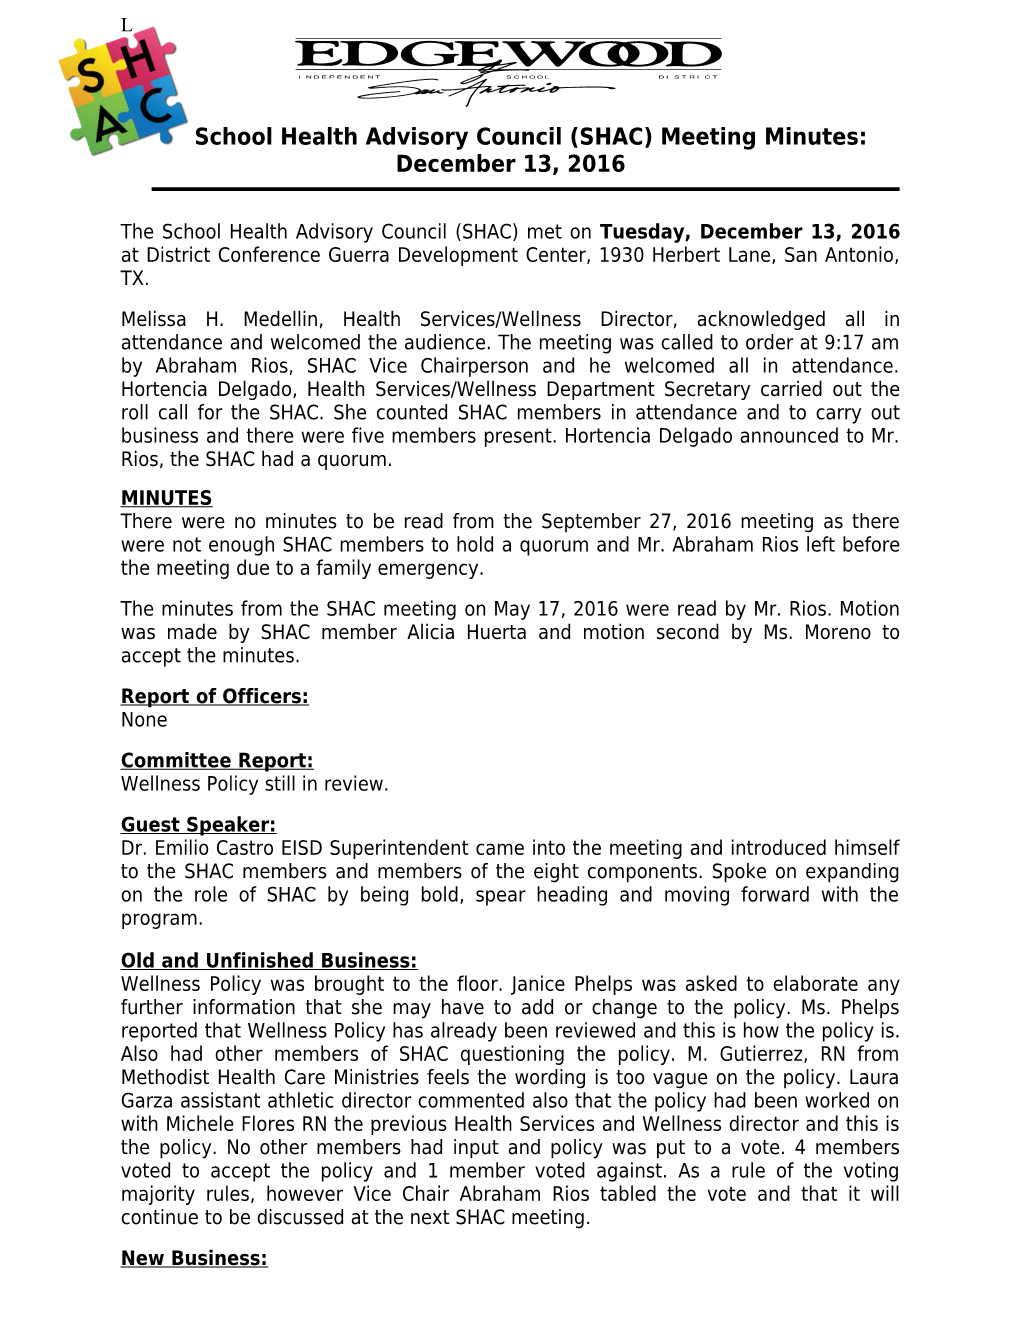 School Health Advisory Council (SHAC) Meeting Minutes: December 13, 2016